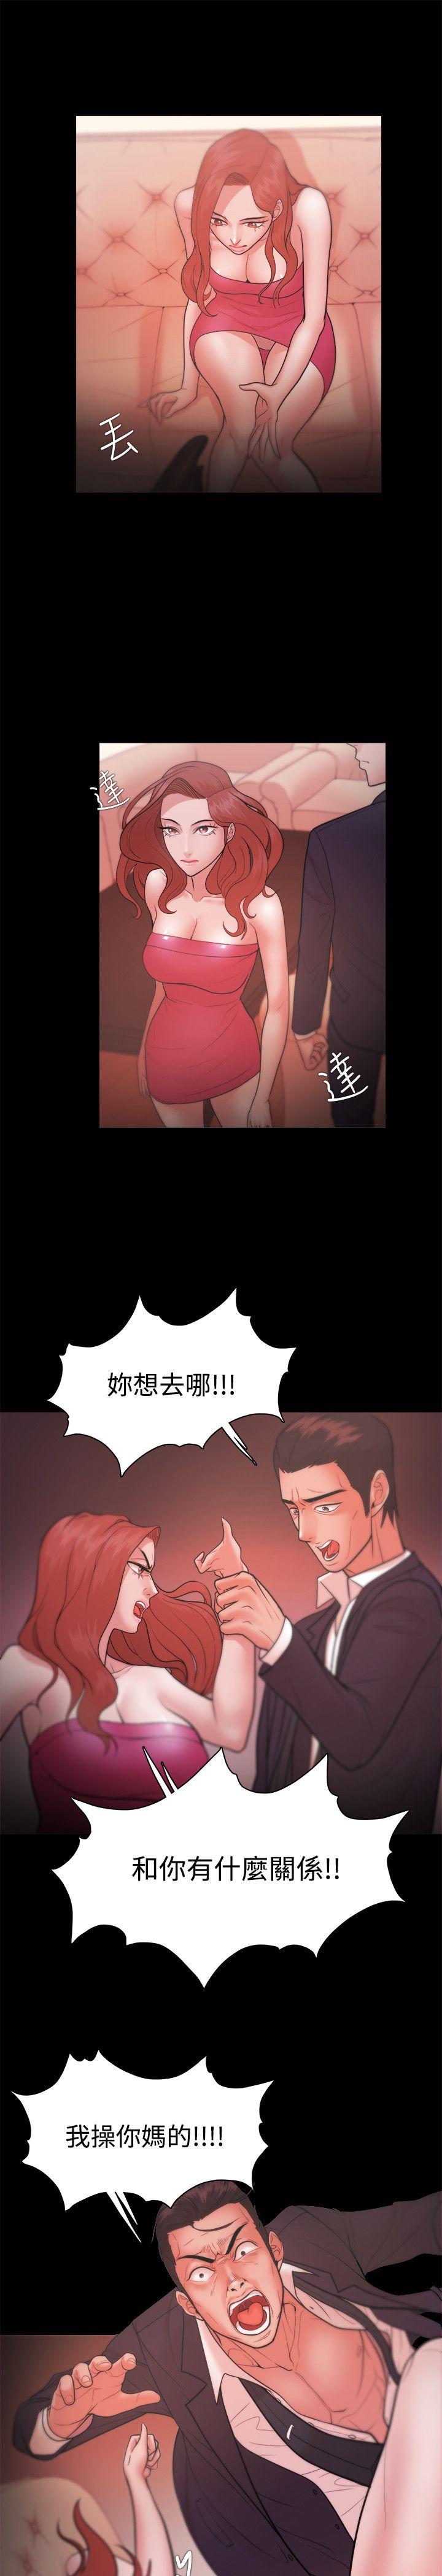 韩国污漫画 Loser 第22话 29